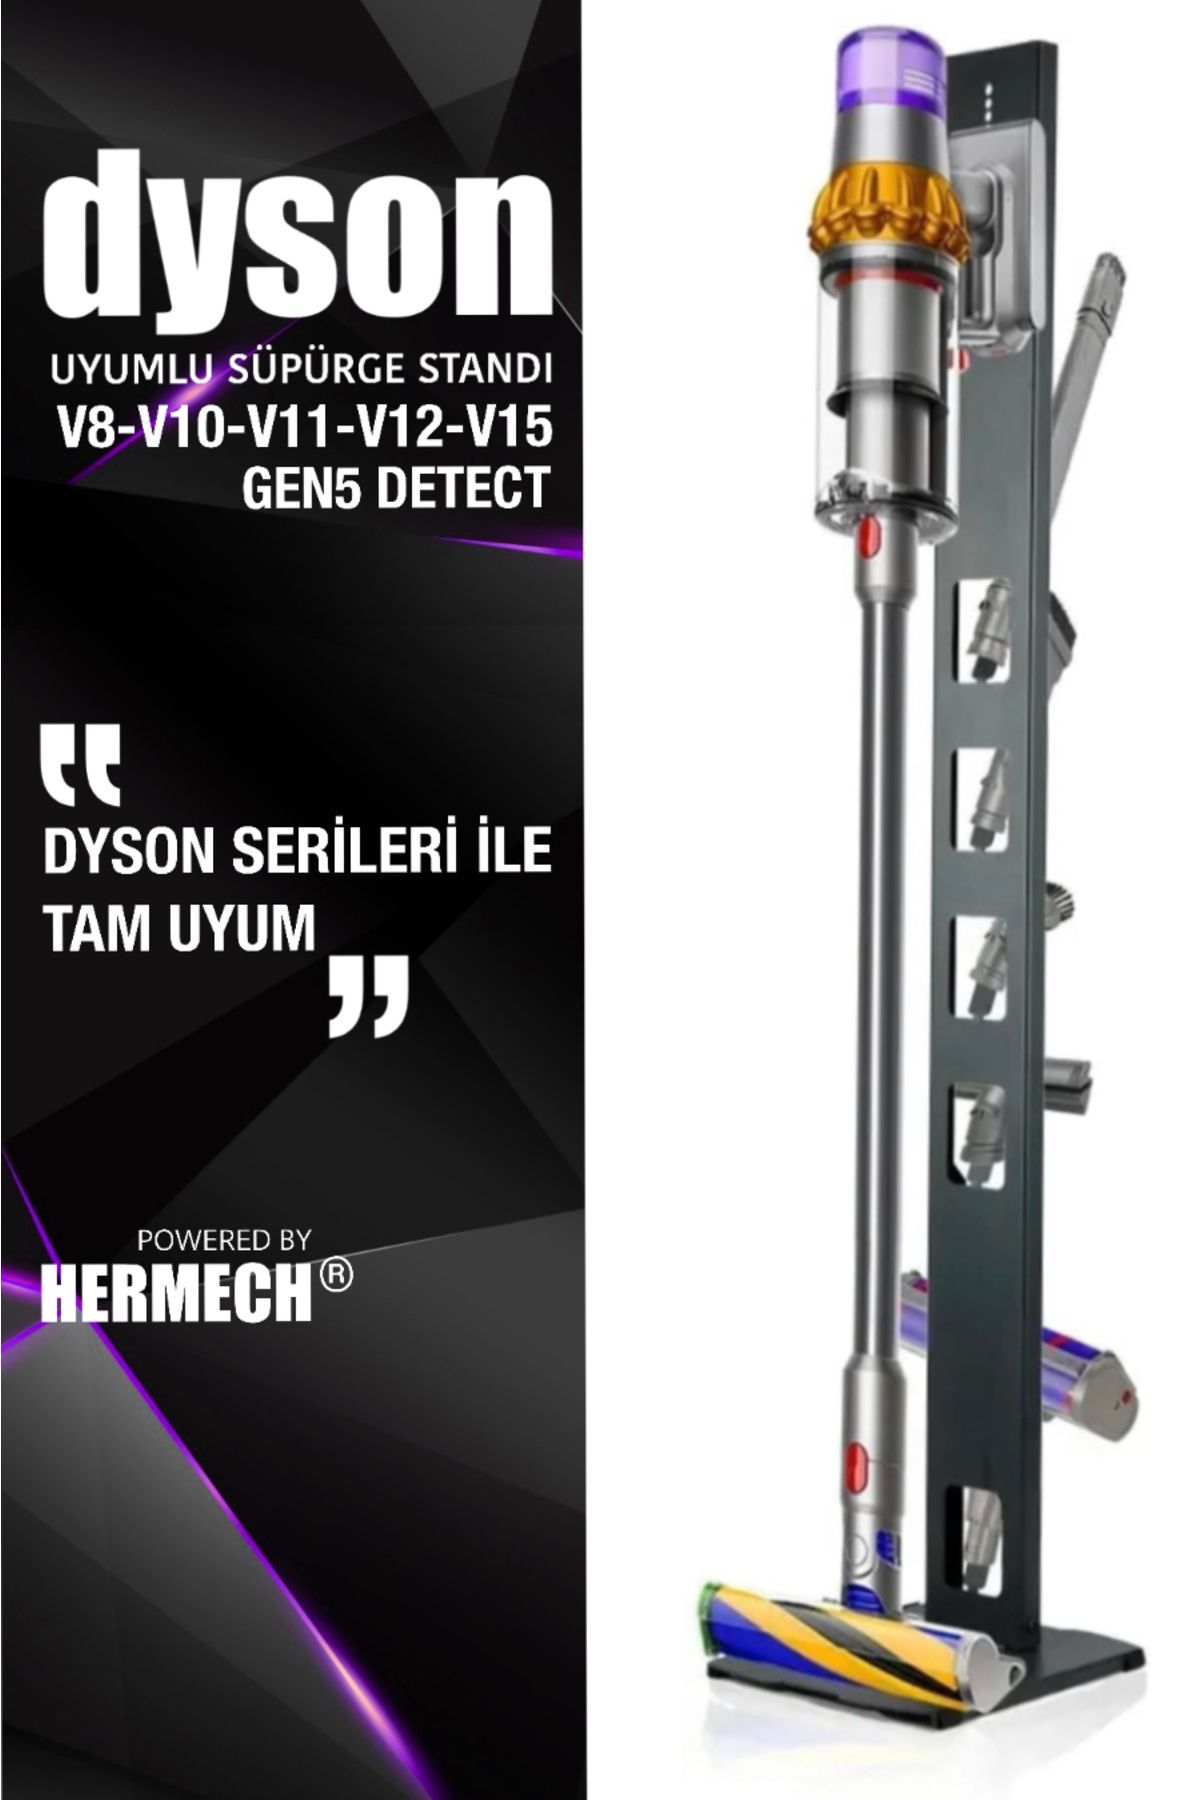 hermech Dyson Gen5detect & V Serileri Uyumlu Süpürge Standı